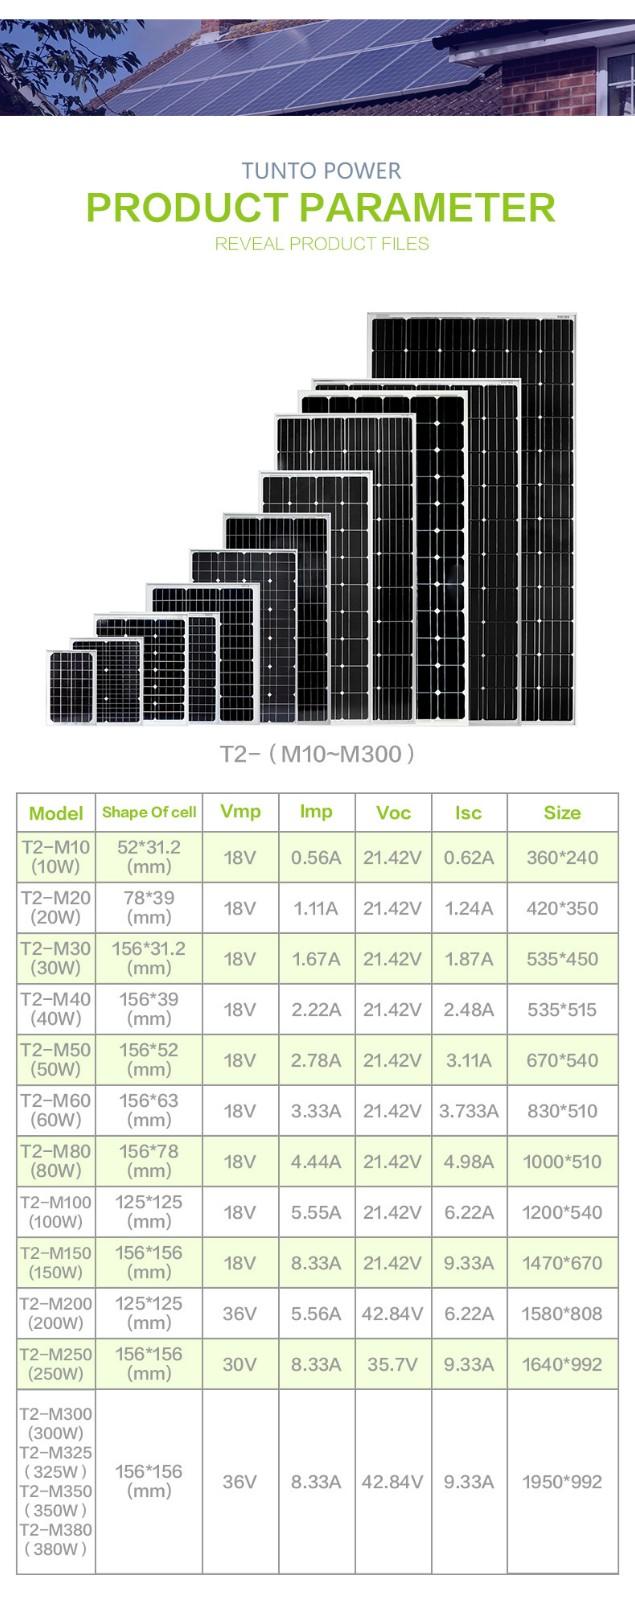 monocrystalline solar panel supplier for solar plant